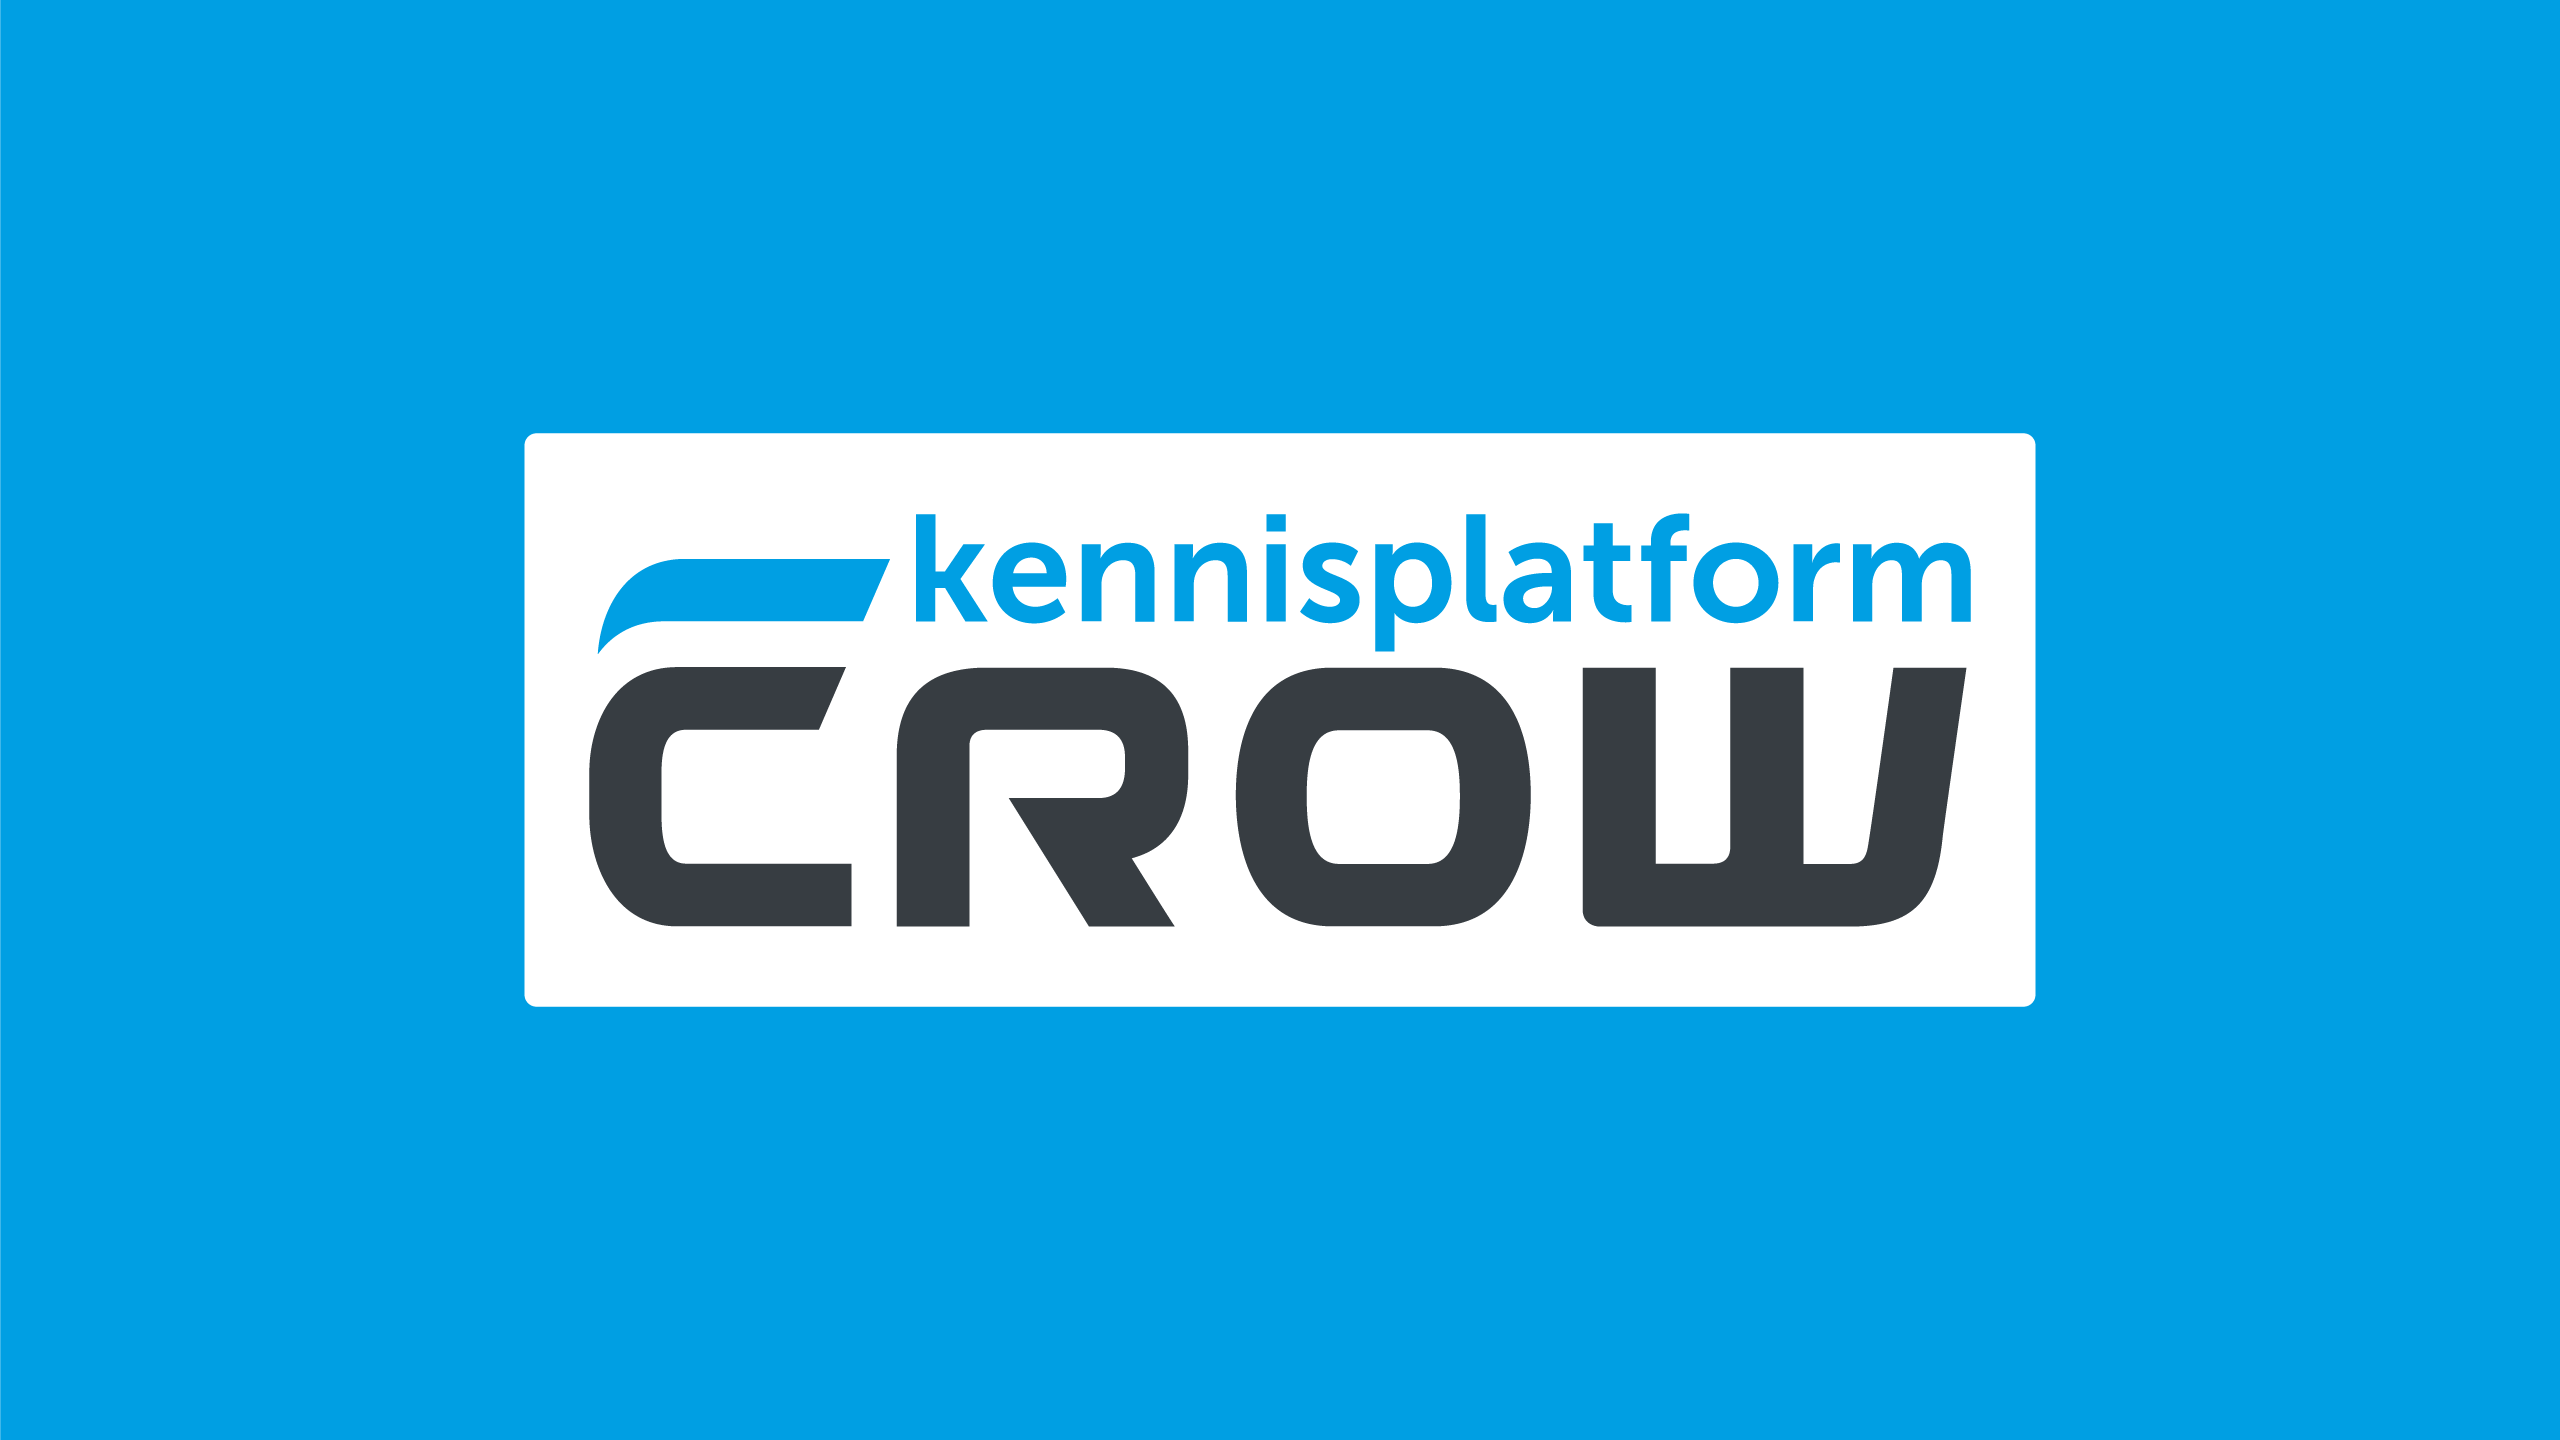 kennisplatform CROW